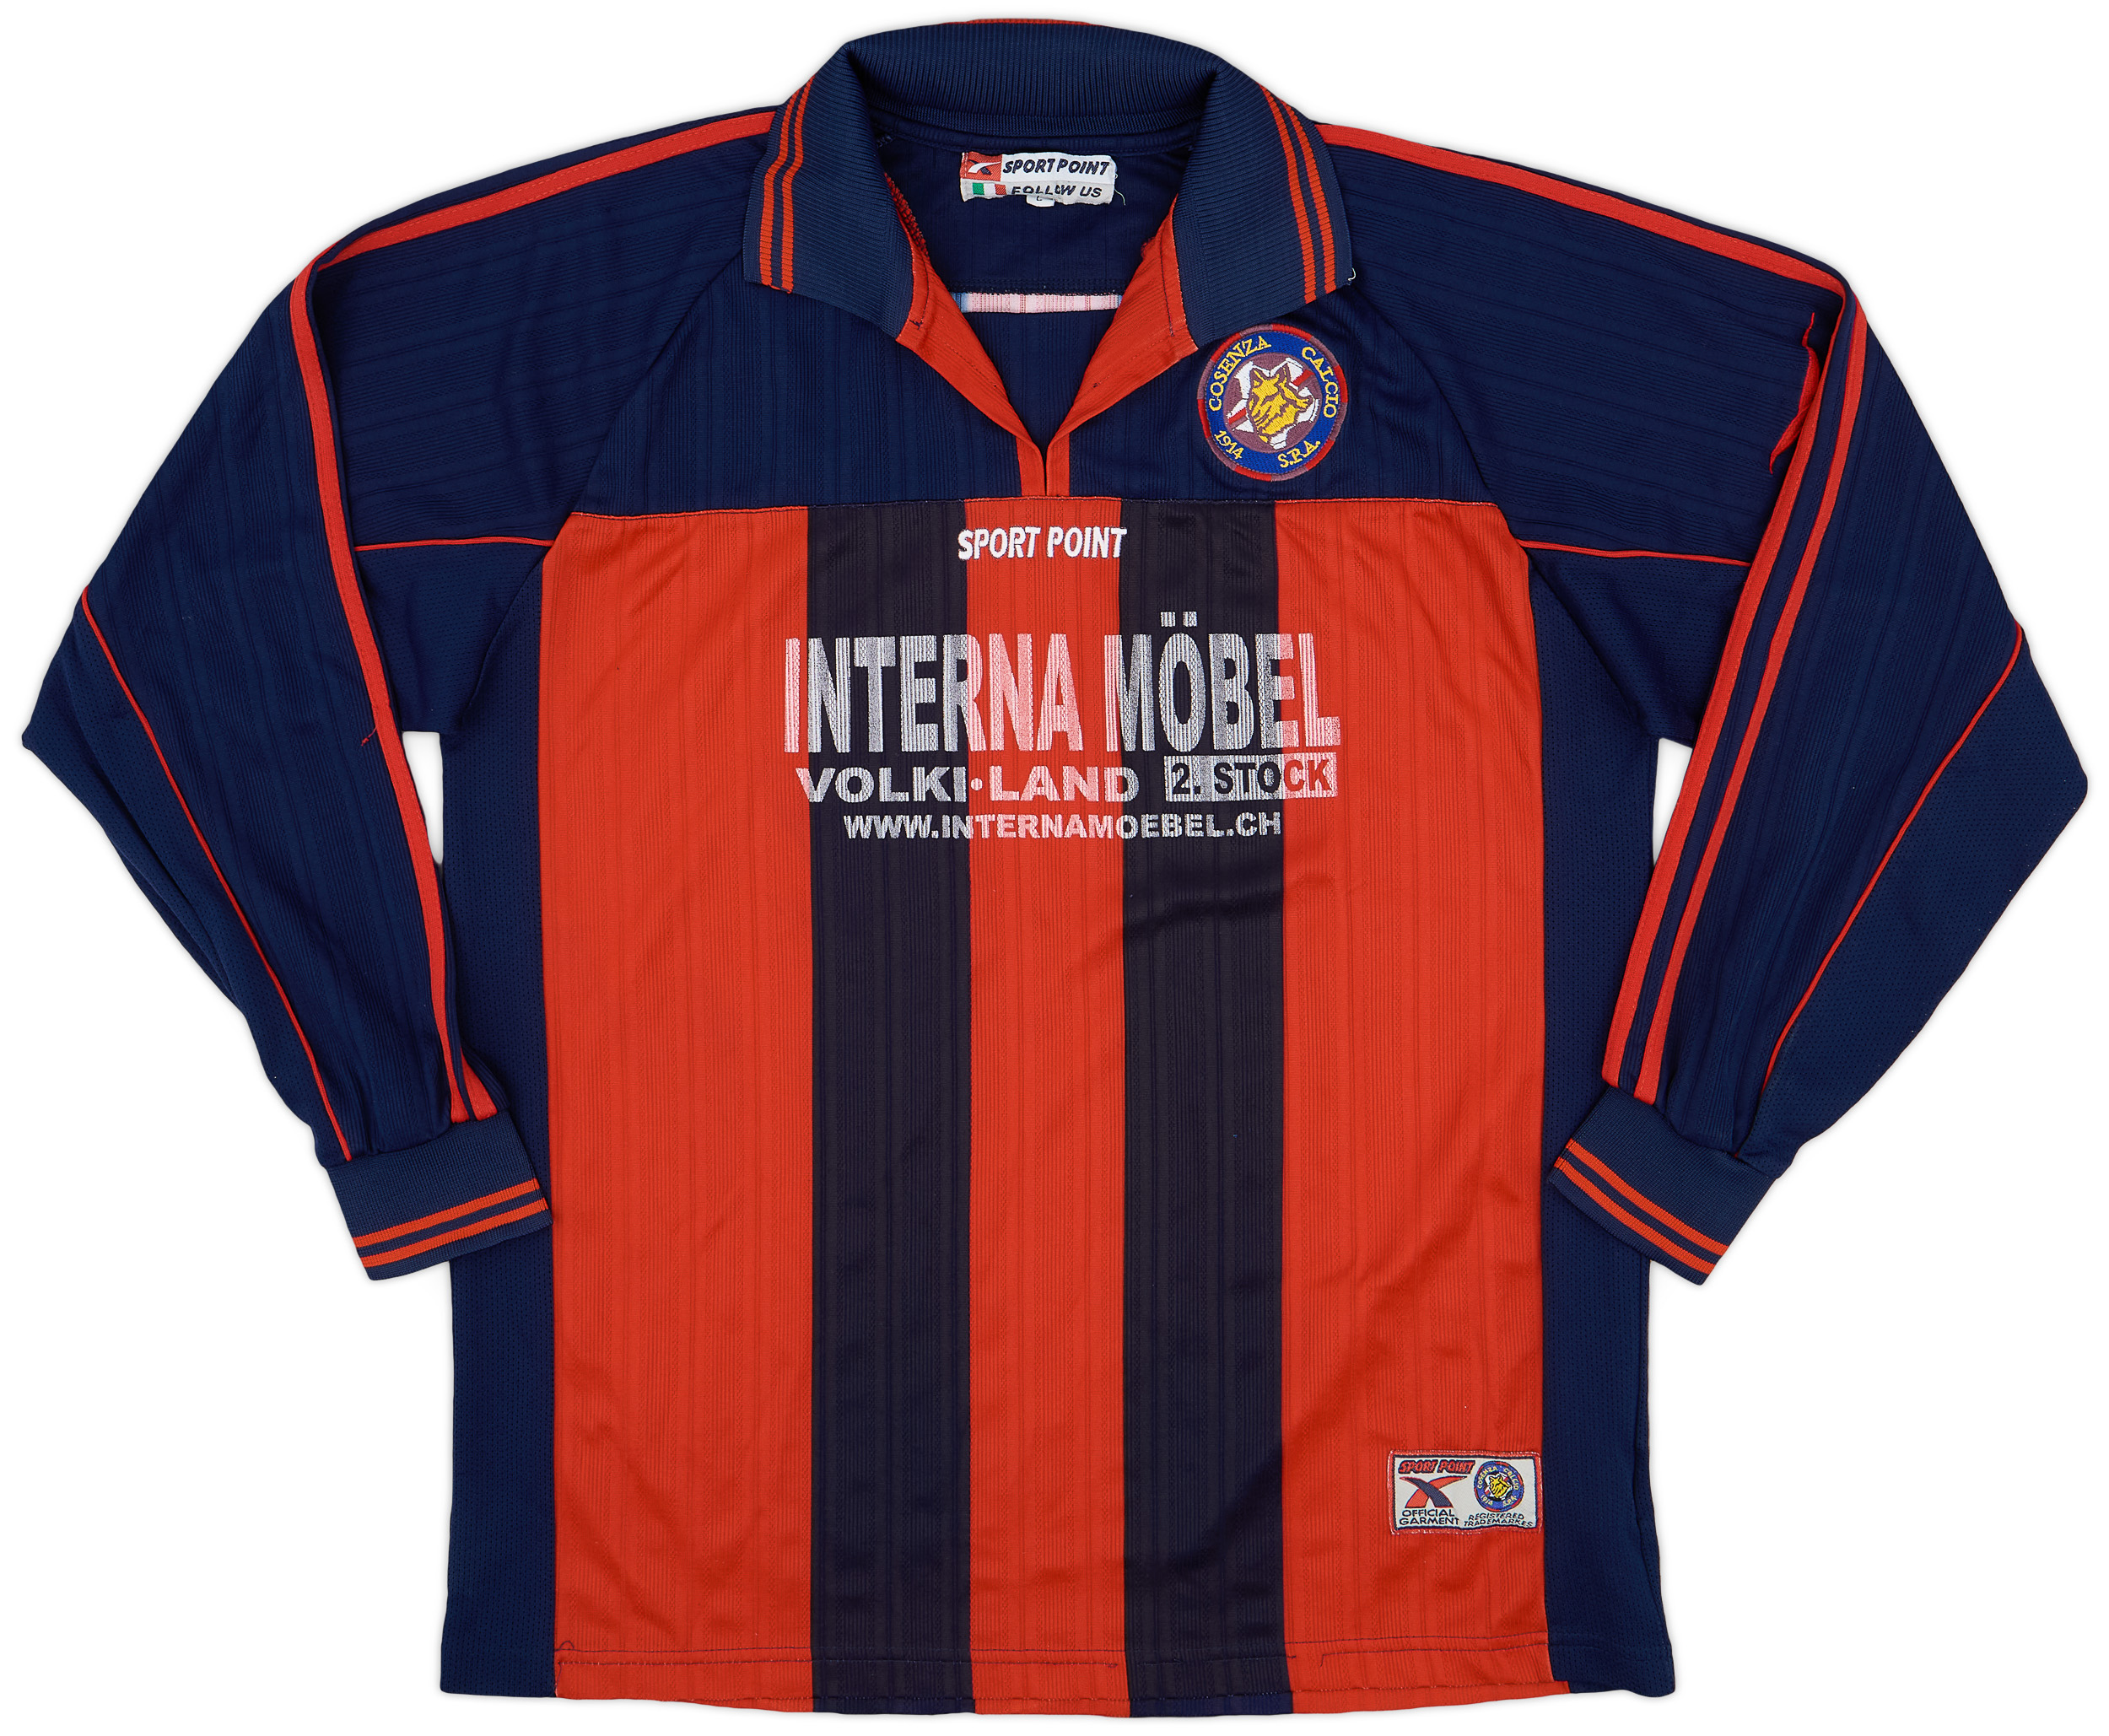 Retro Cosenza Calcio 1914 Shirt